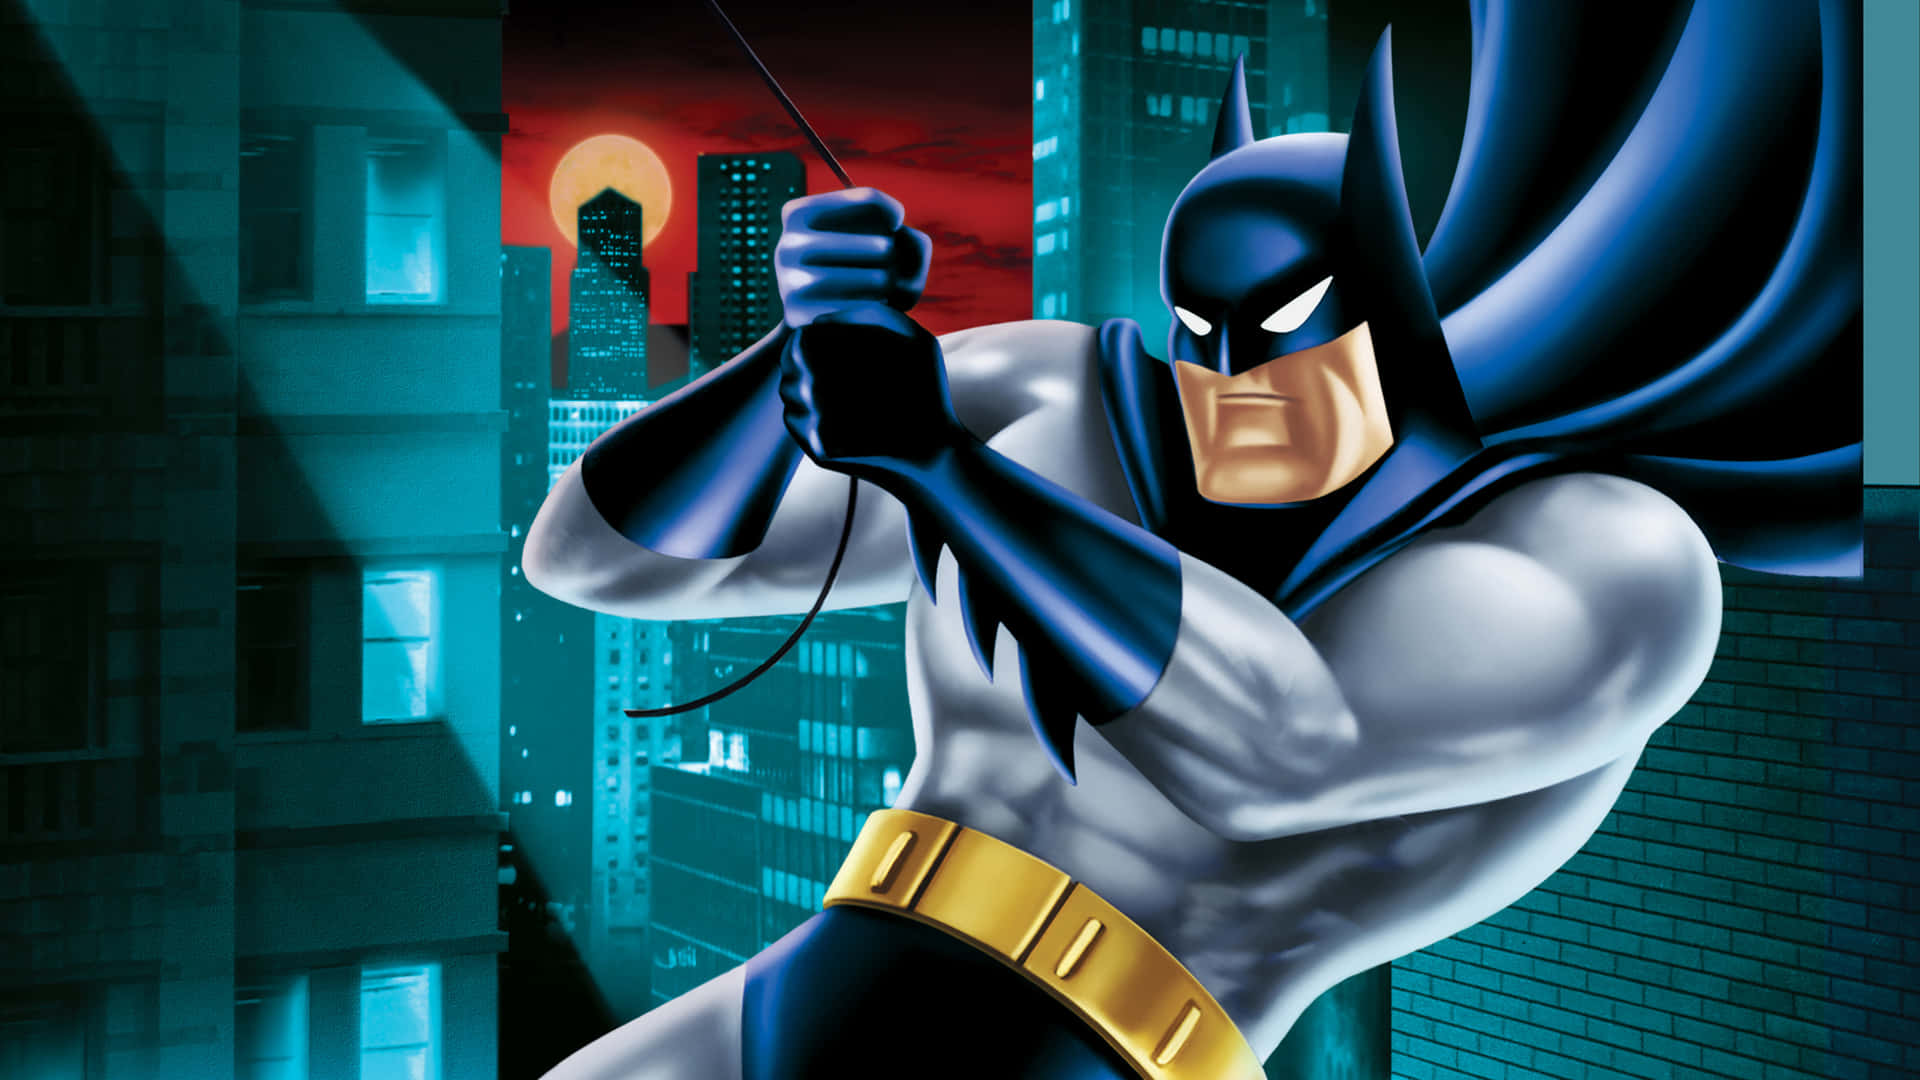 Batman Vintage Art Swinging In Gotham City Picture